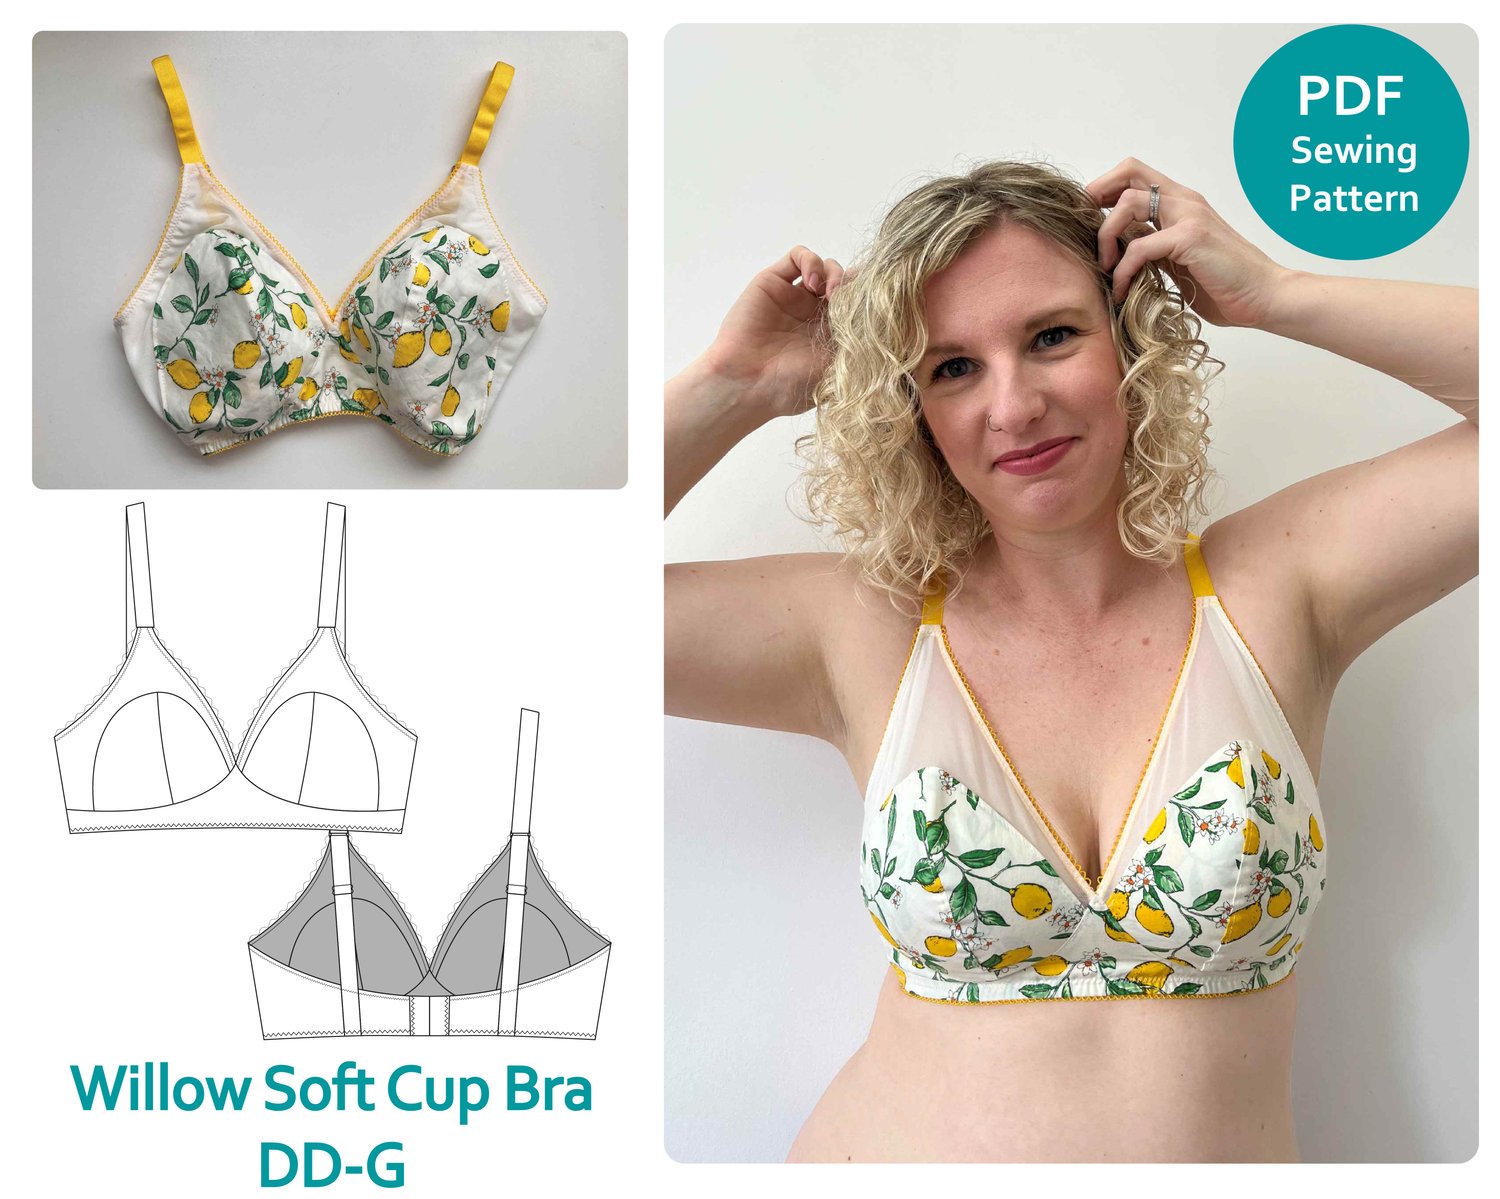 Bra cup pattern, Custom bra pattern, Cotton bra pattern